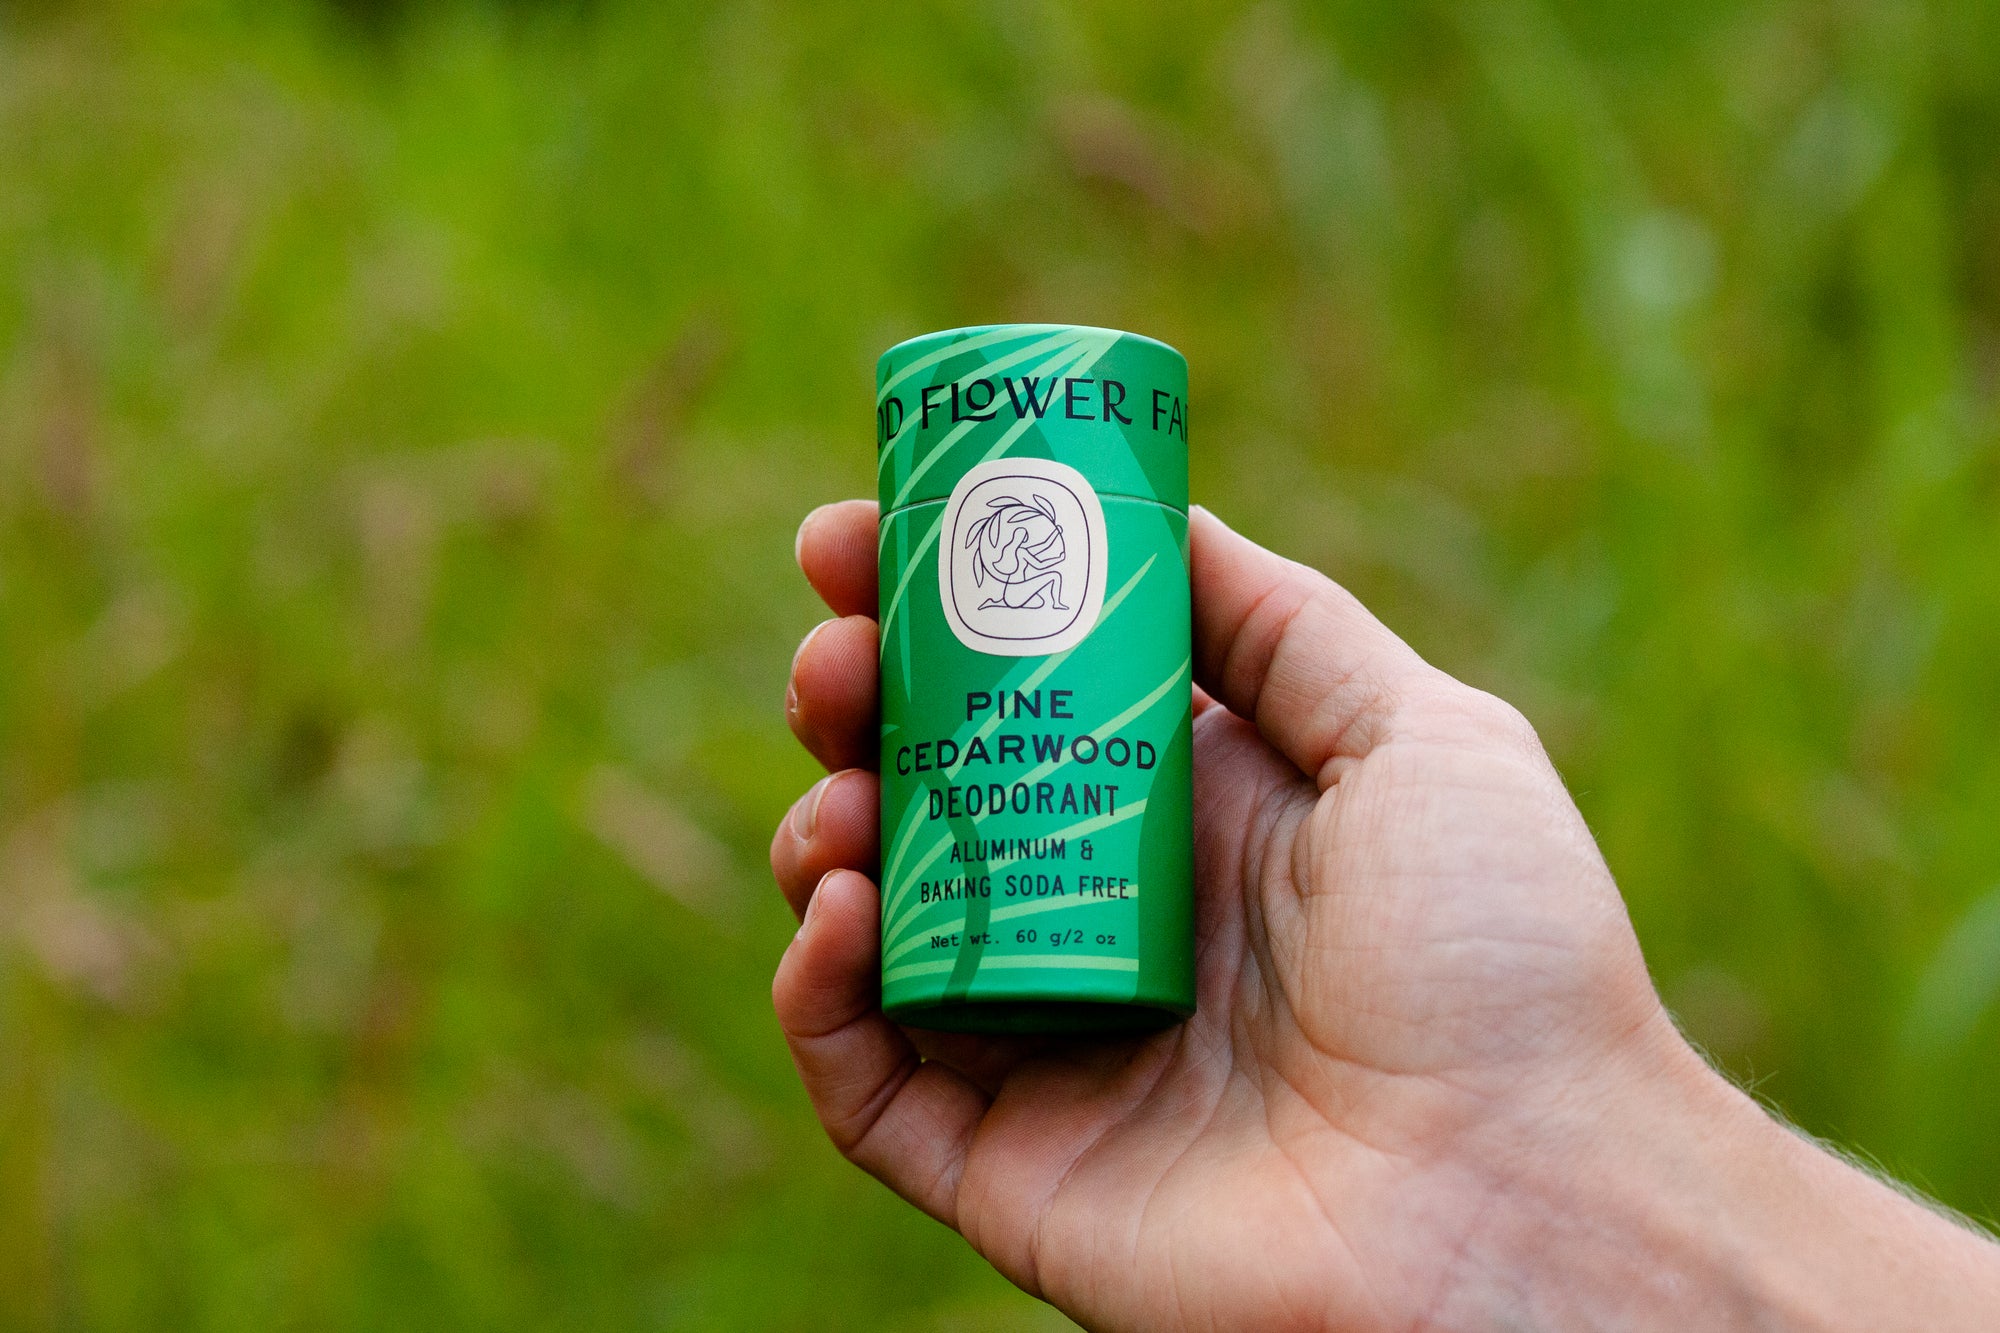 Pine Cedarwood Deodorant / 2.75 oz Biodegradable Plastic-Free Stick